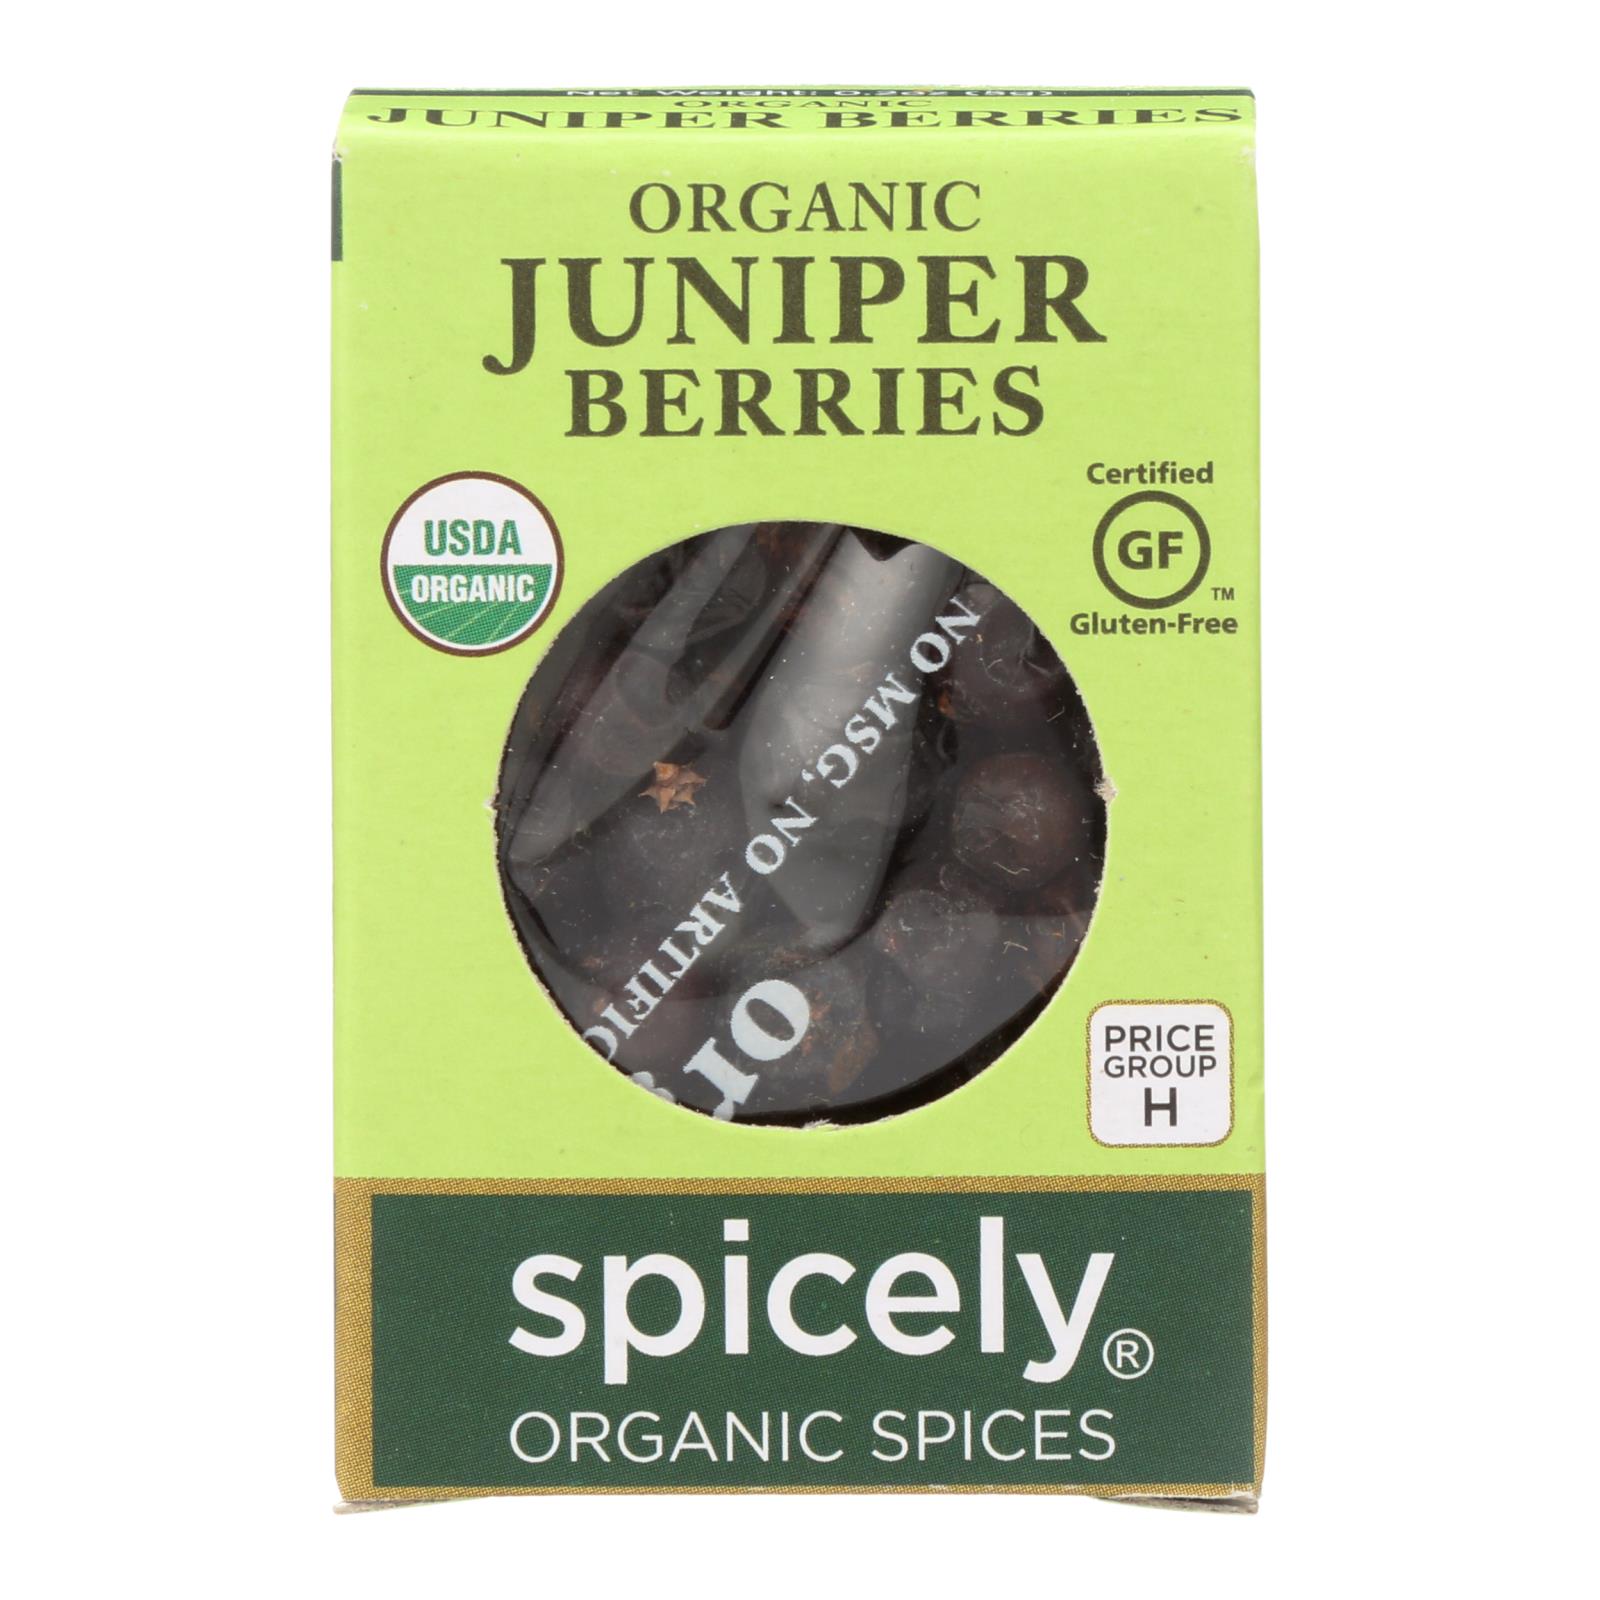 Spicely Organics - Organic Juniper Berries - 6개 묶음상품 - 0.2 oz.